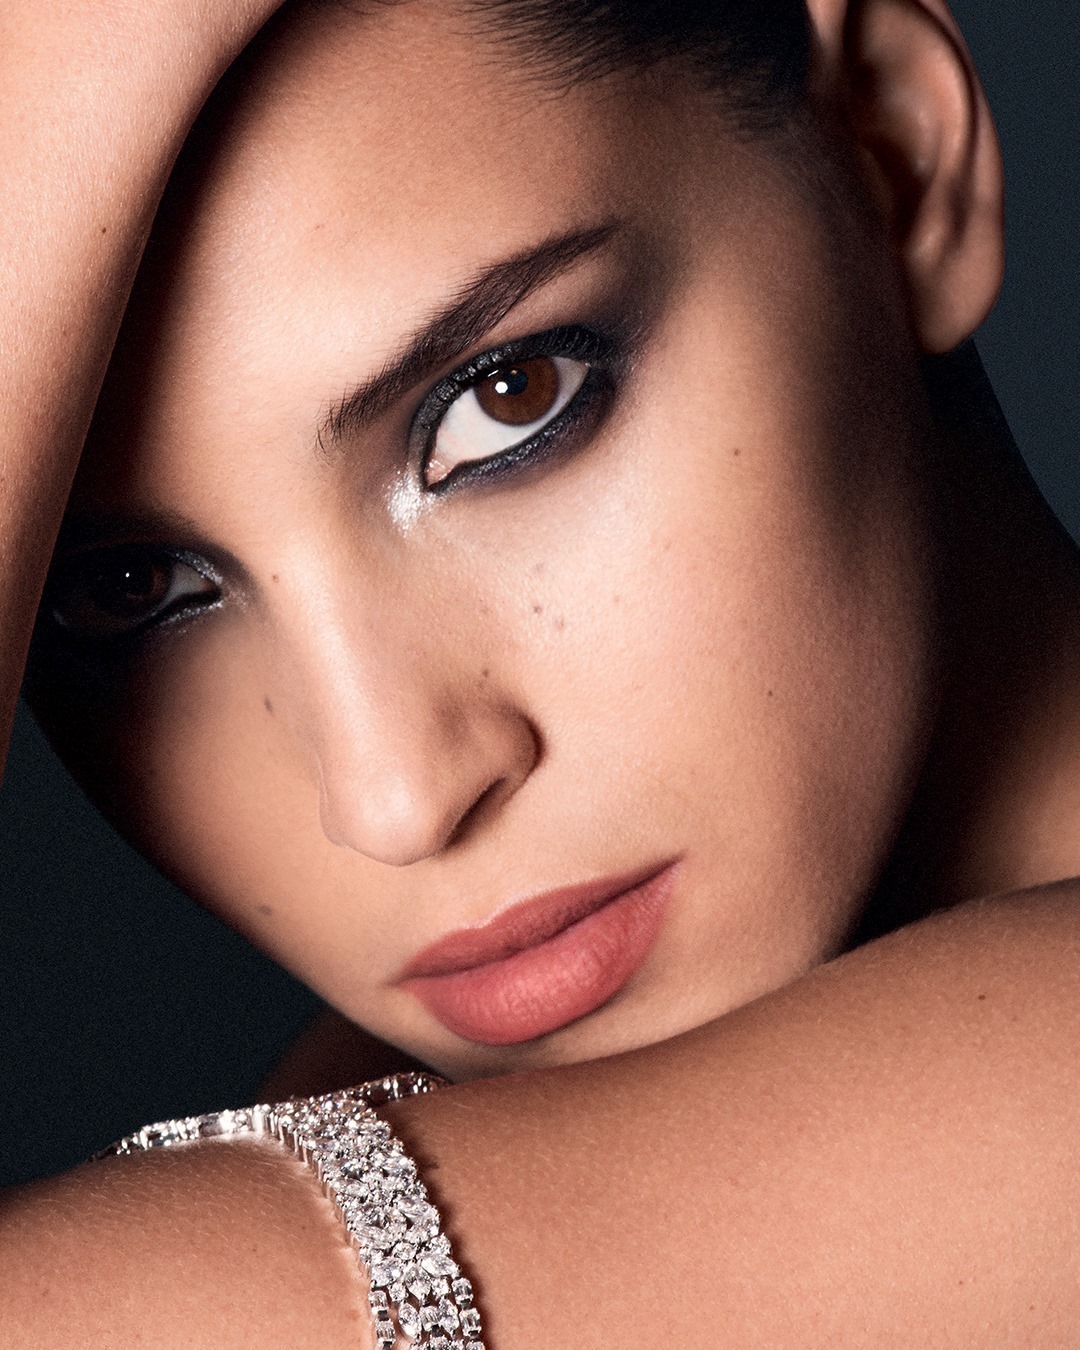 Armani beauty - Actress @AdriaArjona, new face of #Armanibeauty, presents the iconic Armani smokey eye. She wears SMOOTH SILK EYE PENCIL in shade 4, EYE TINT in shade 43 "Ice" and EYES TO KILL CLASSIC...